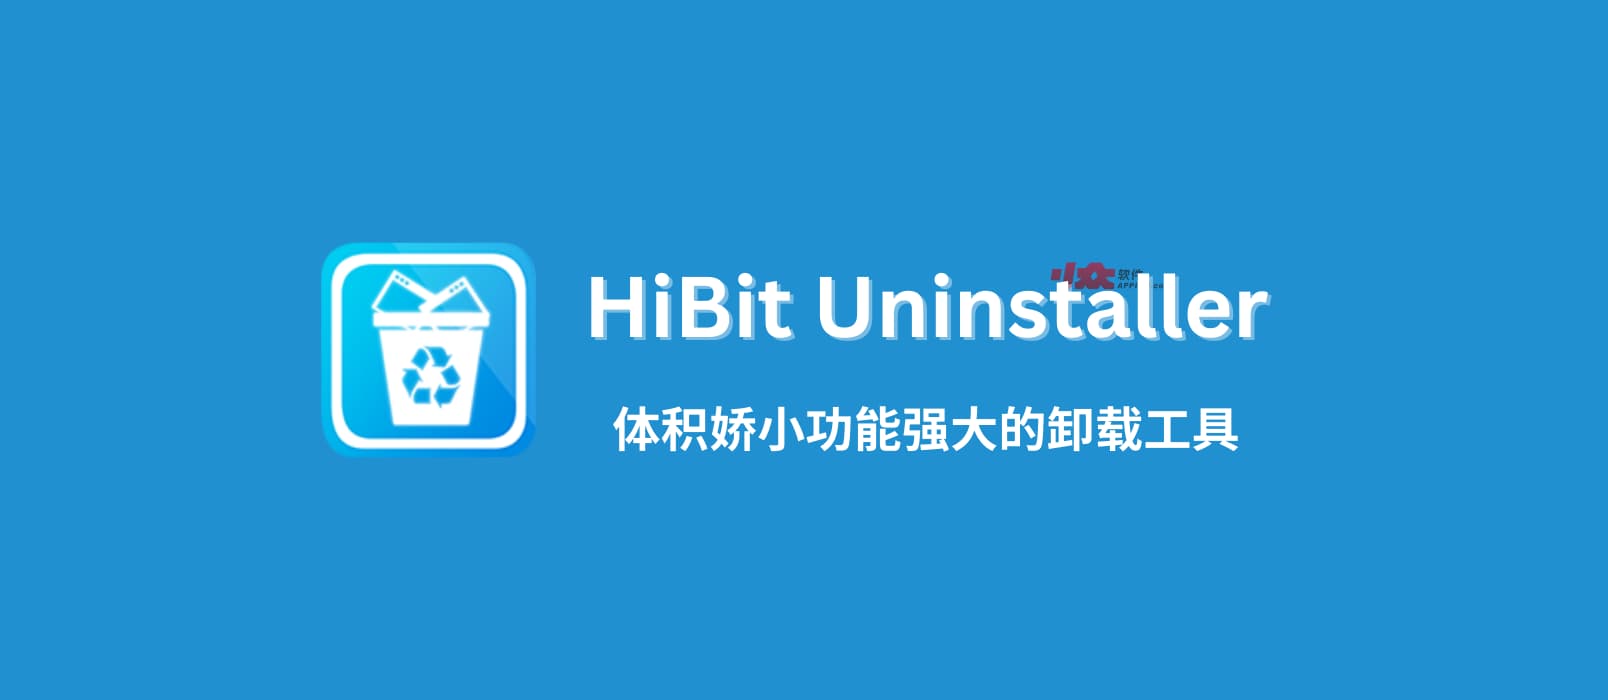 HiBit Uninstaller - 3.19MB，体积娇小功能强大的卸载工具[Windows]